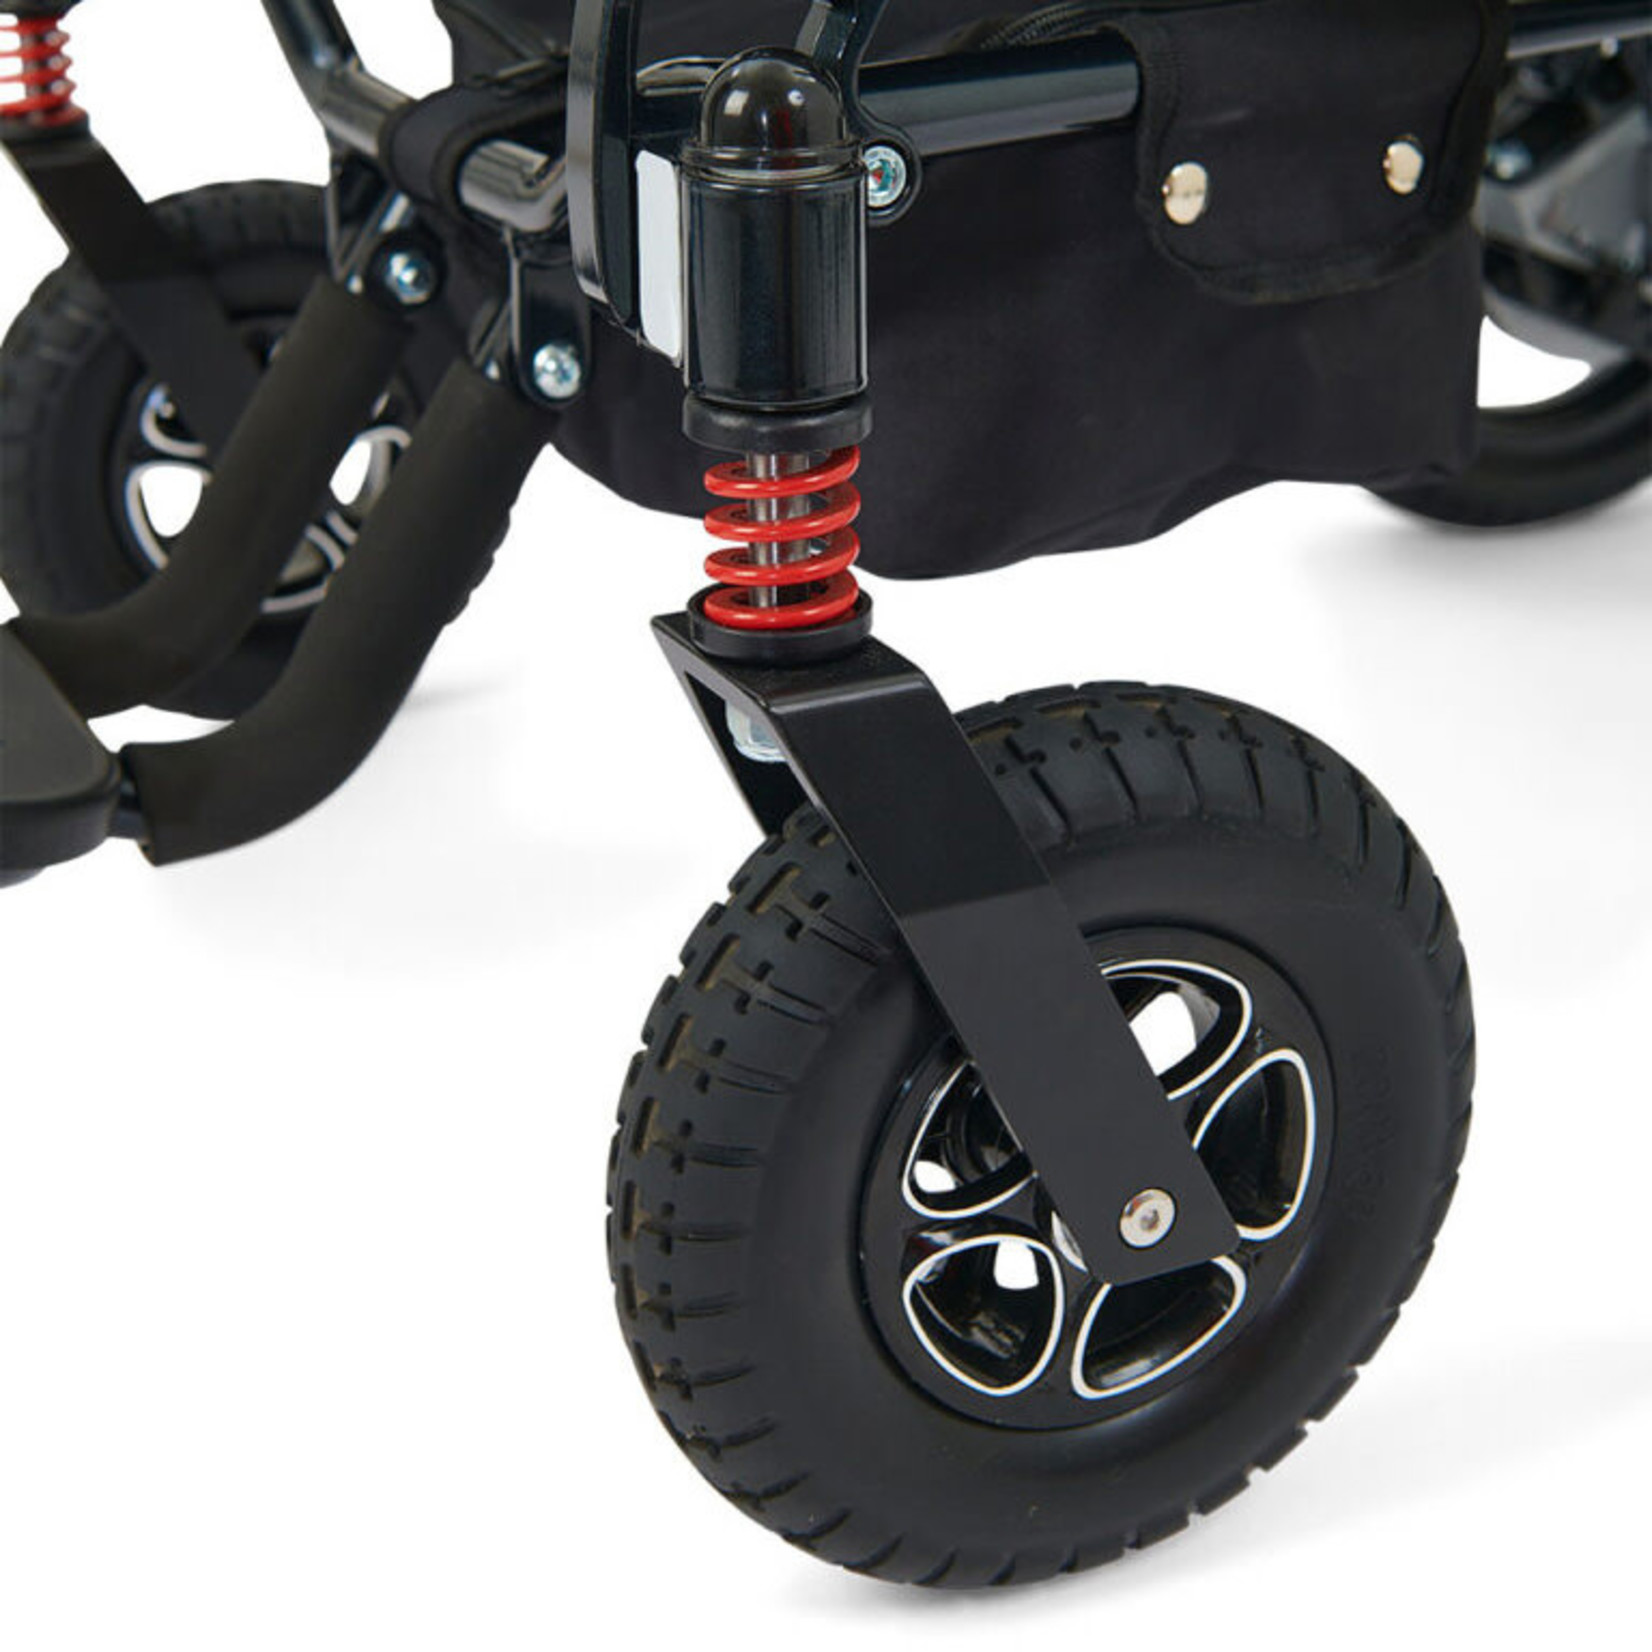 Golden GP301 Stride Folding Power Wheelchair